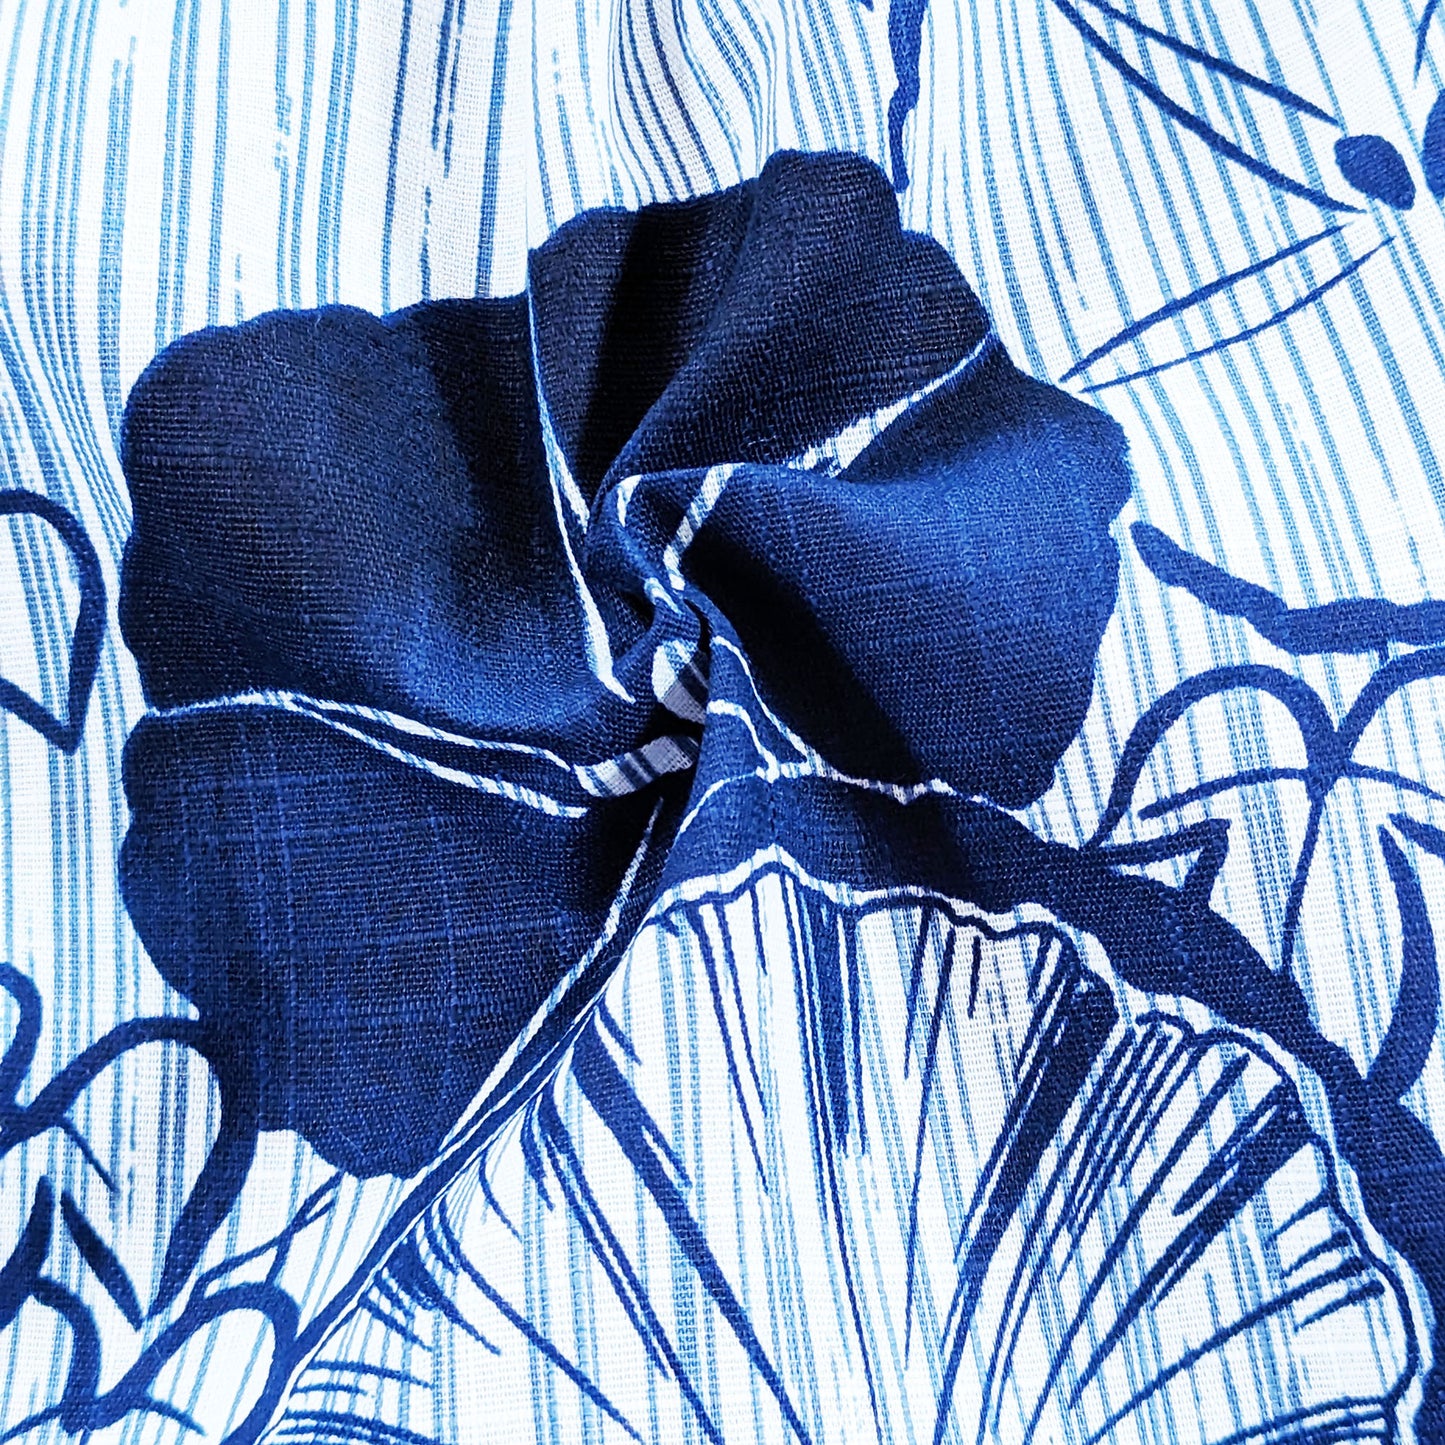 Yukata Kimono Gift Set - Blue Morning Glories in Patterned Blue and White